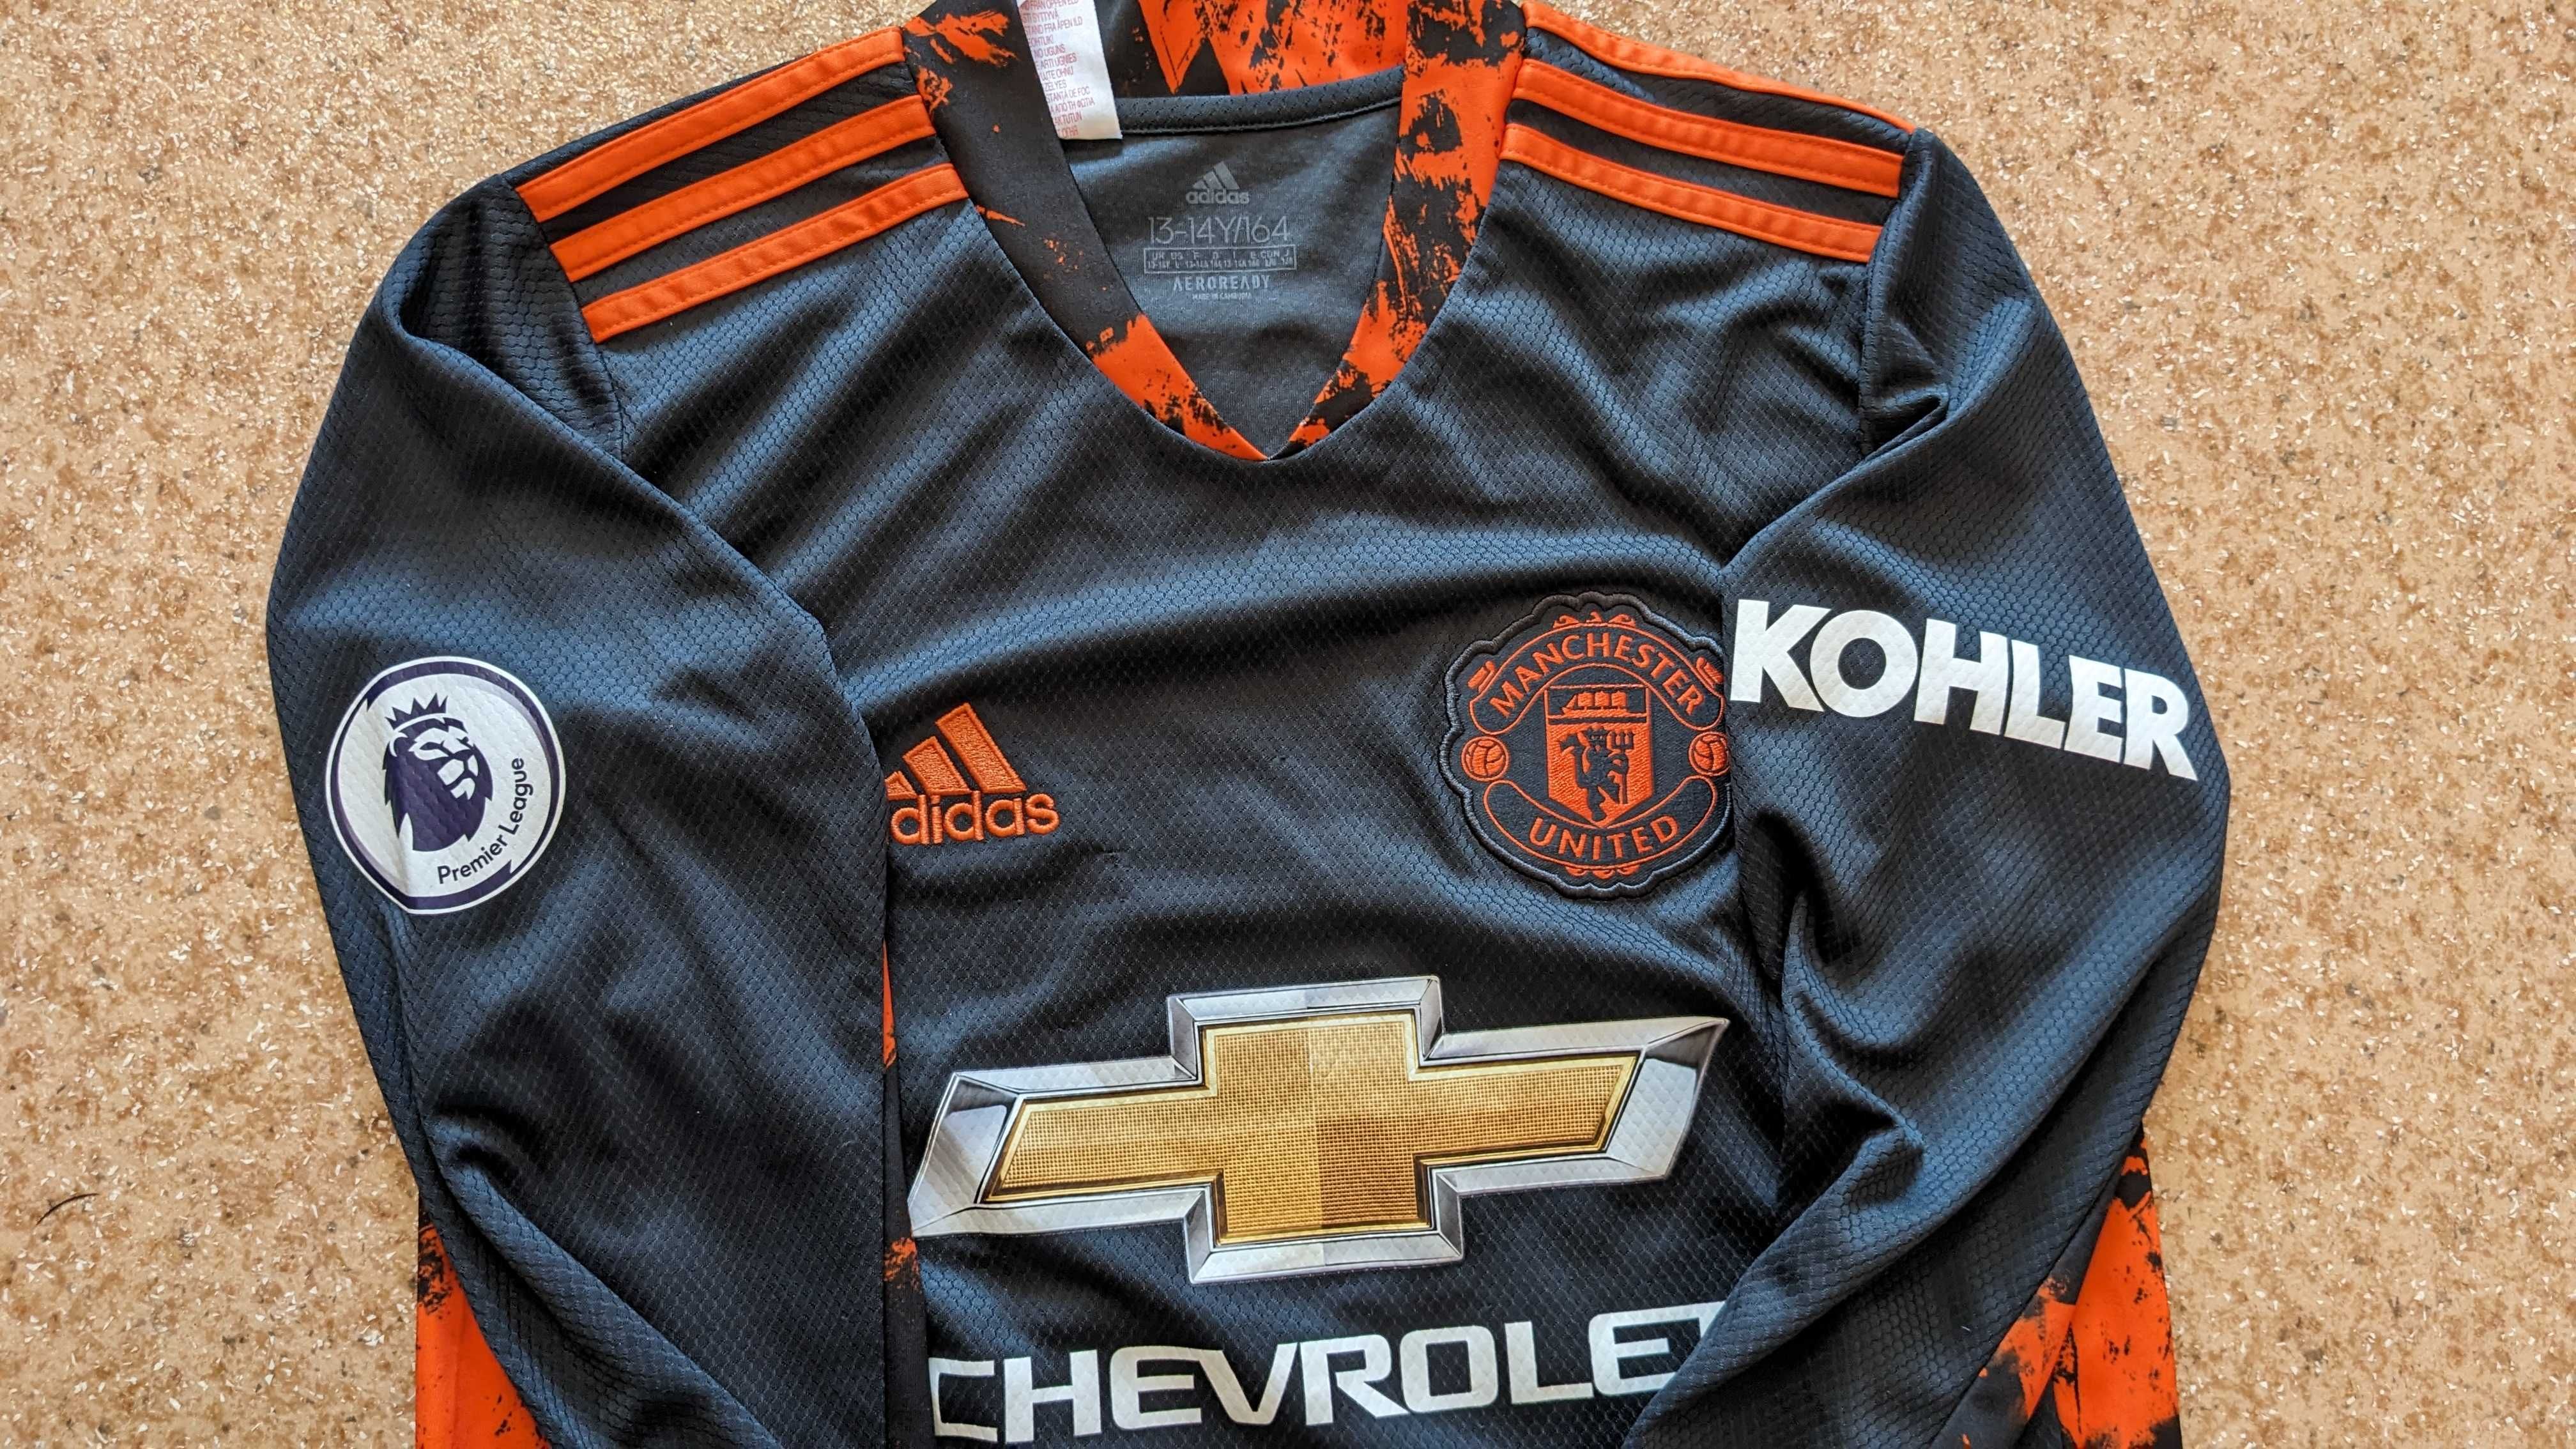 Детская футболка Adidas Manchester United 20/21. 13-14 лет